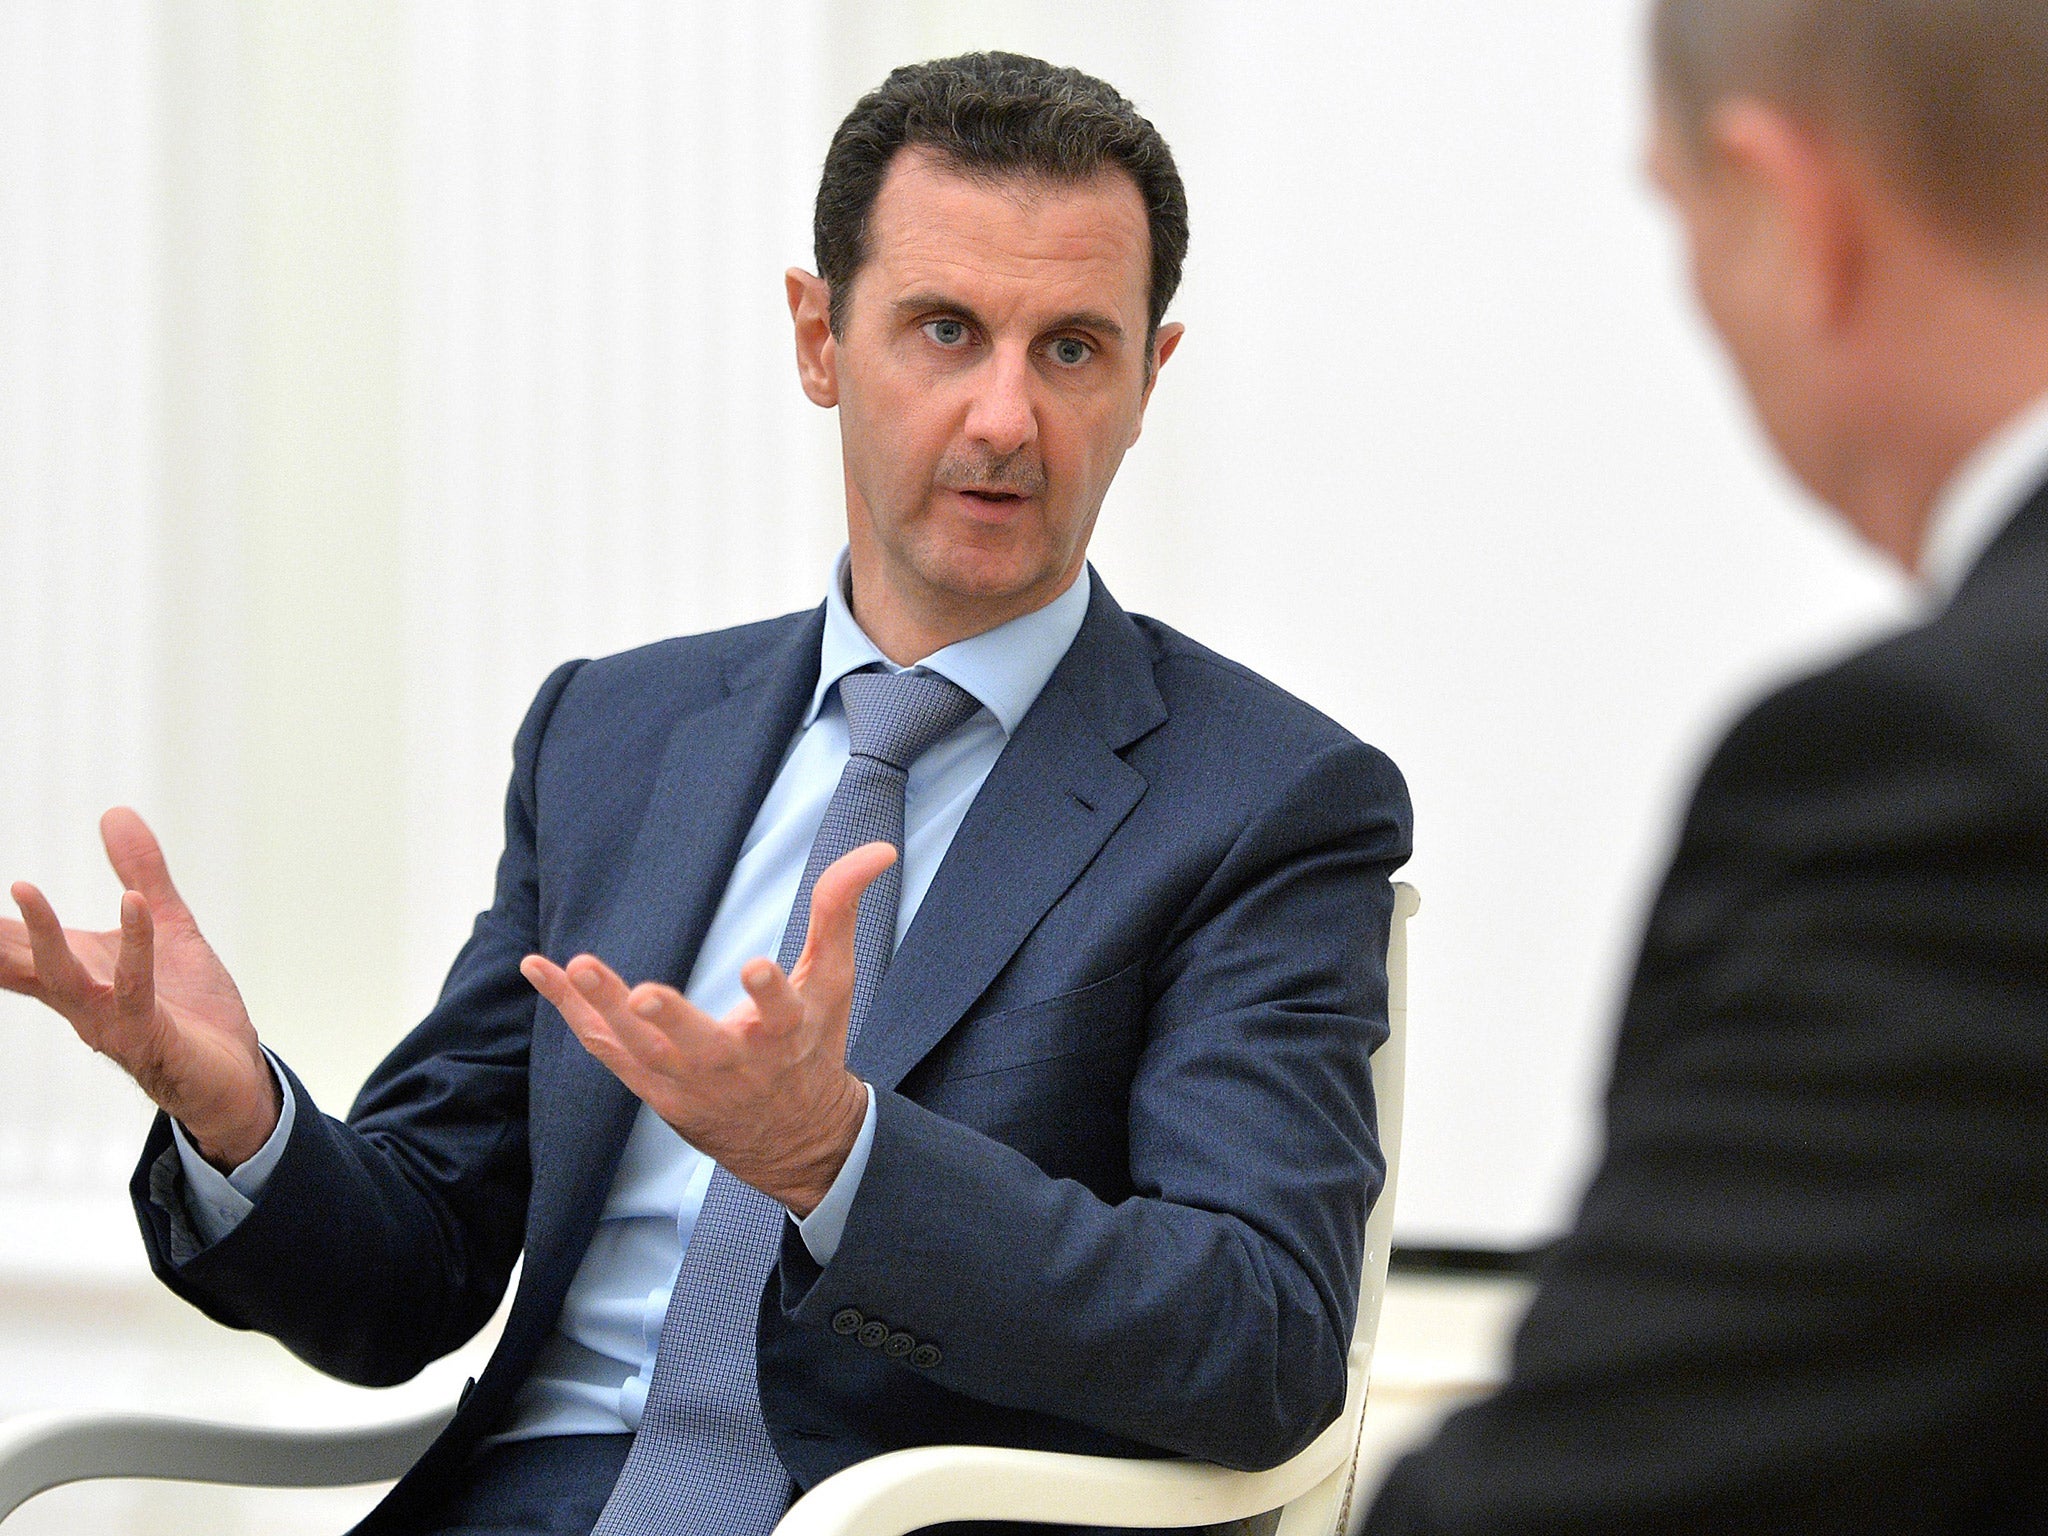 President Bashar al-Assad has been accused of war crimes